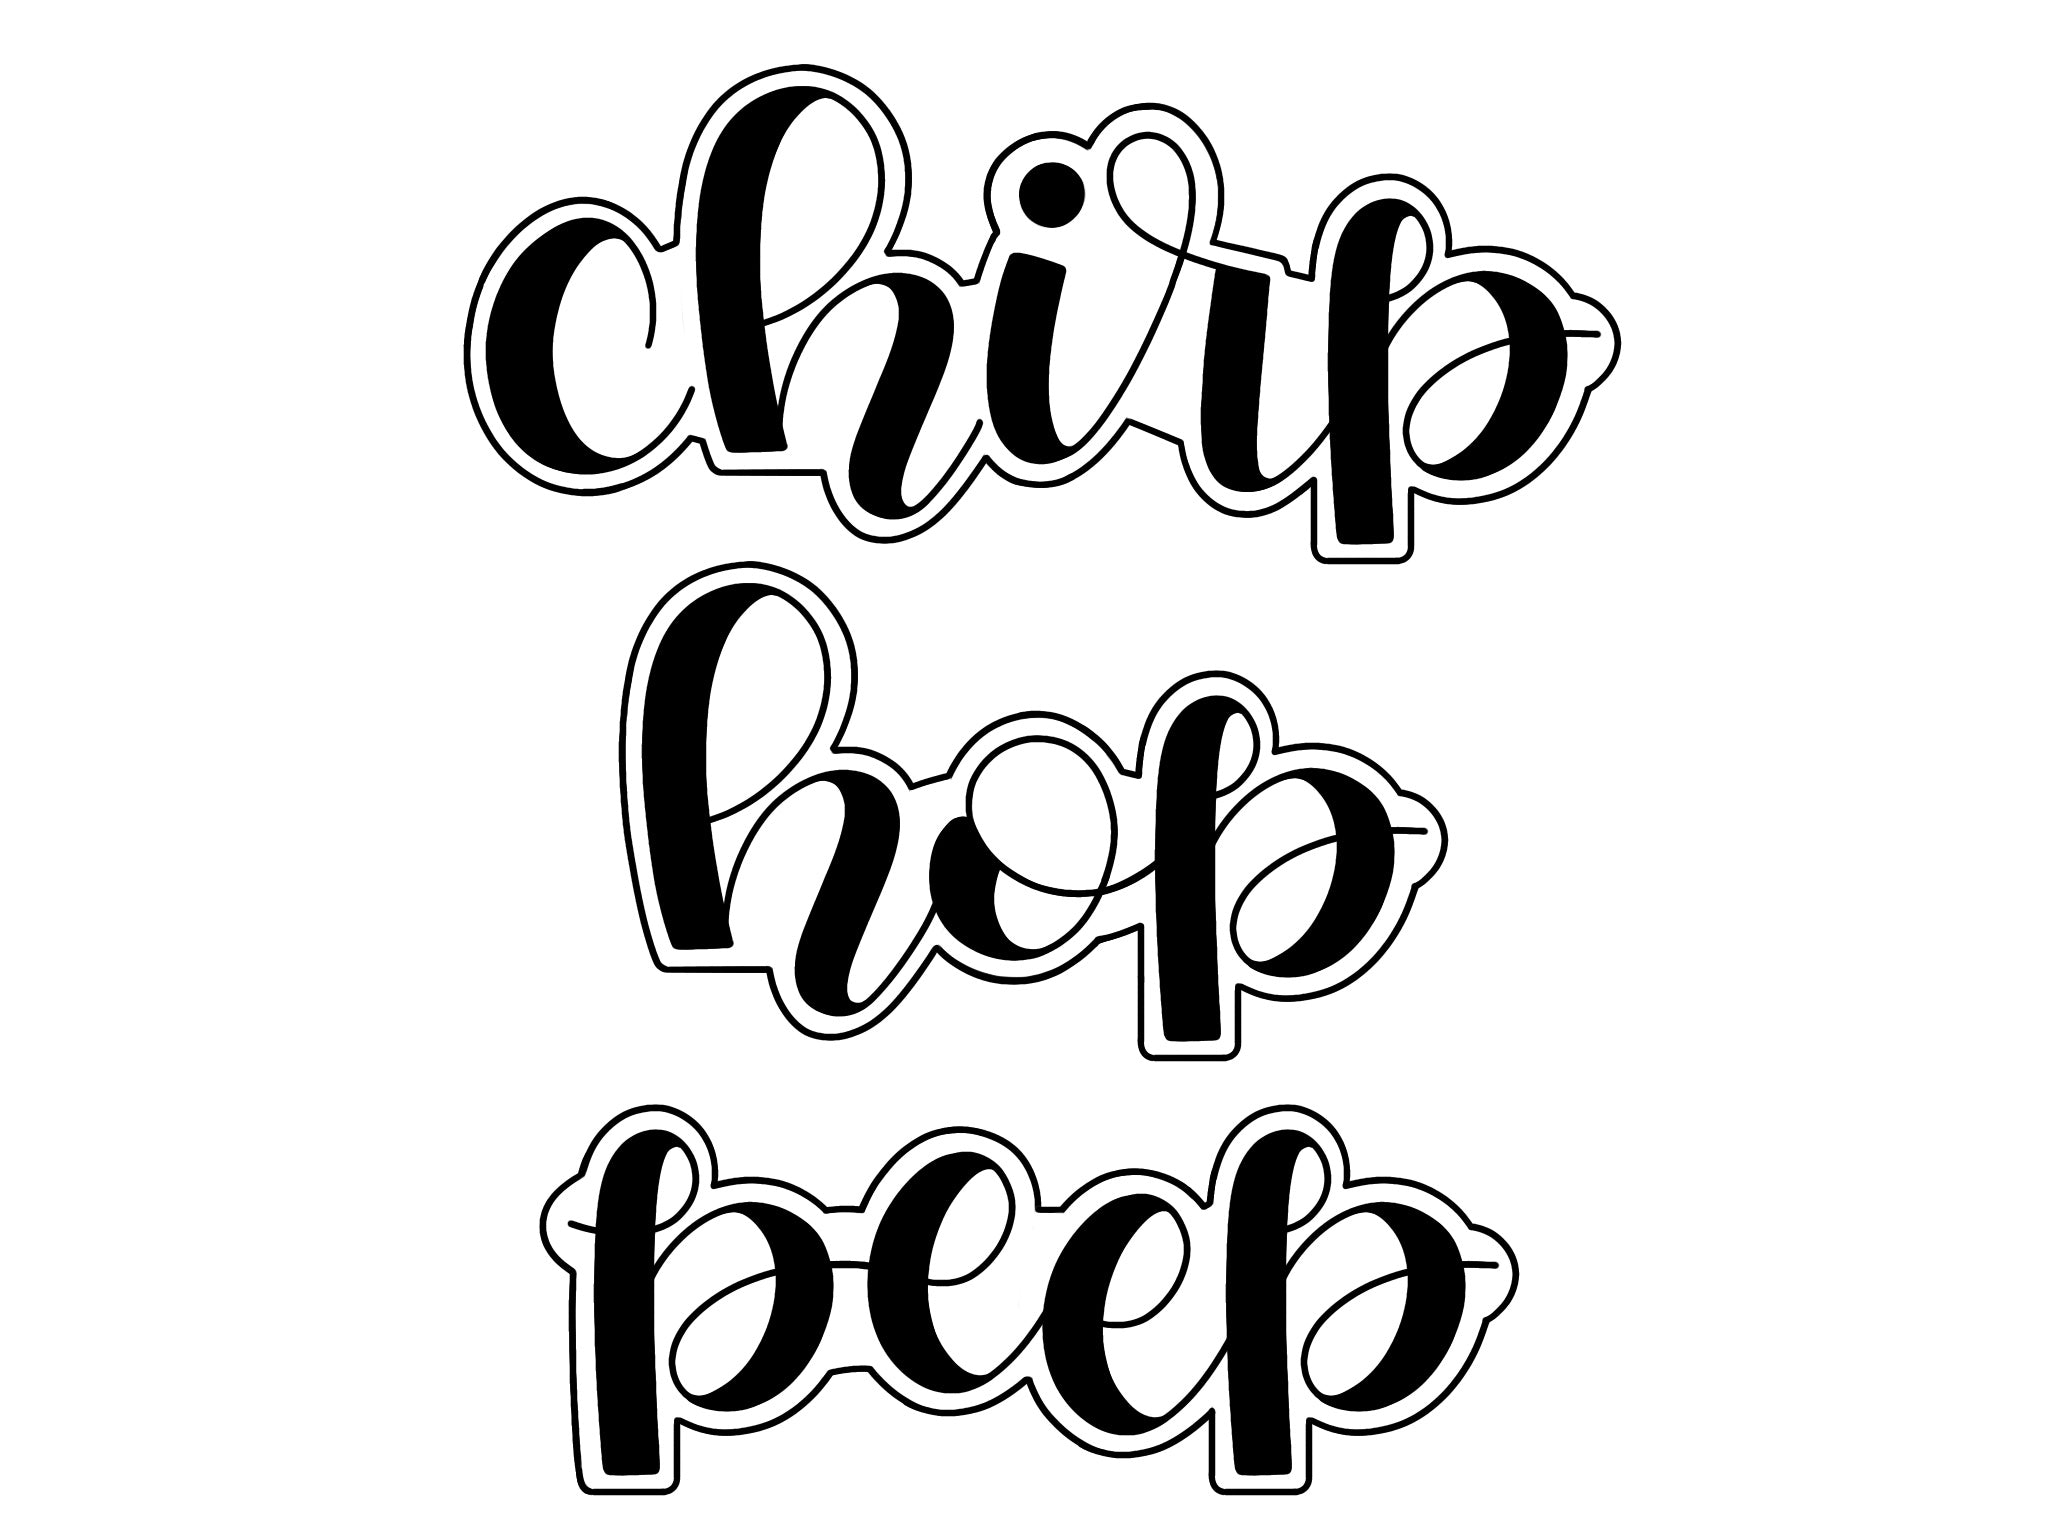 Chirp Hop Peep